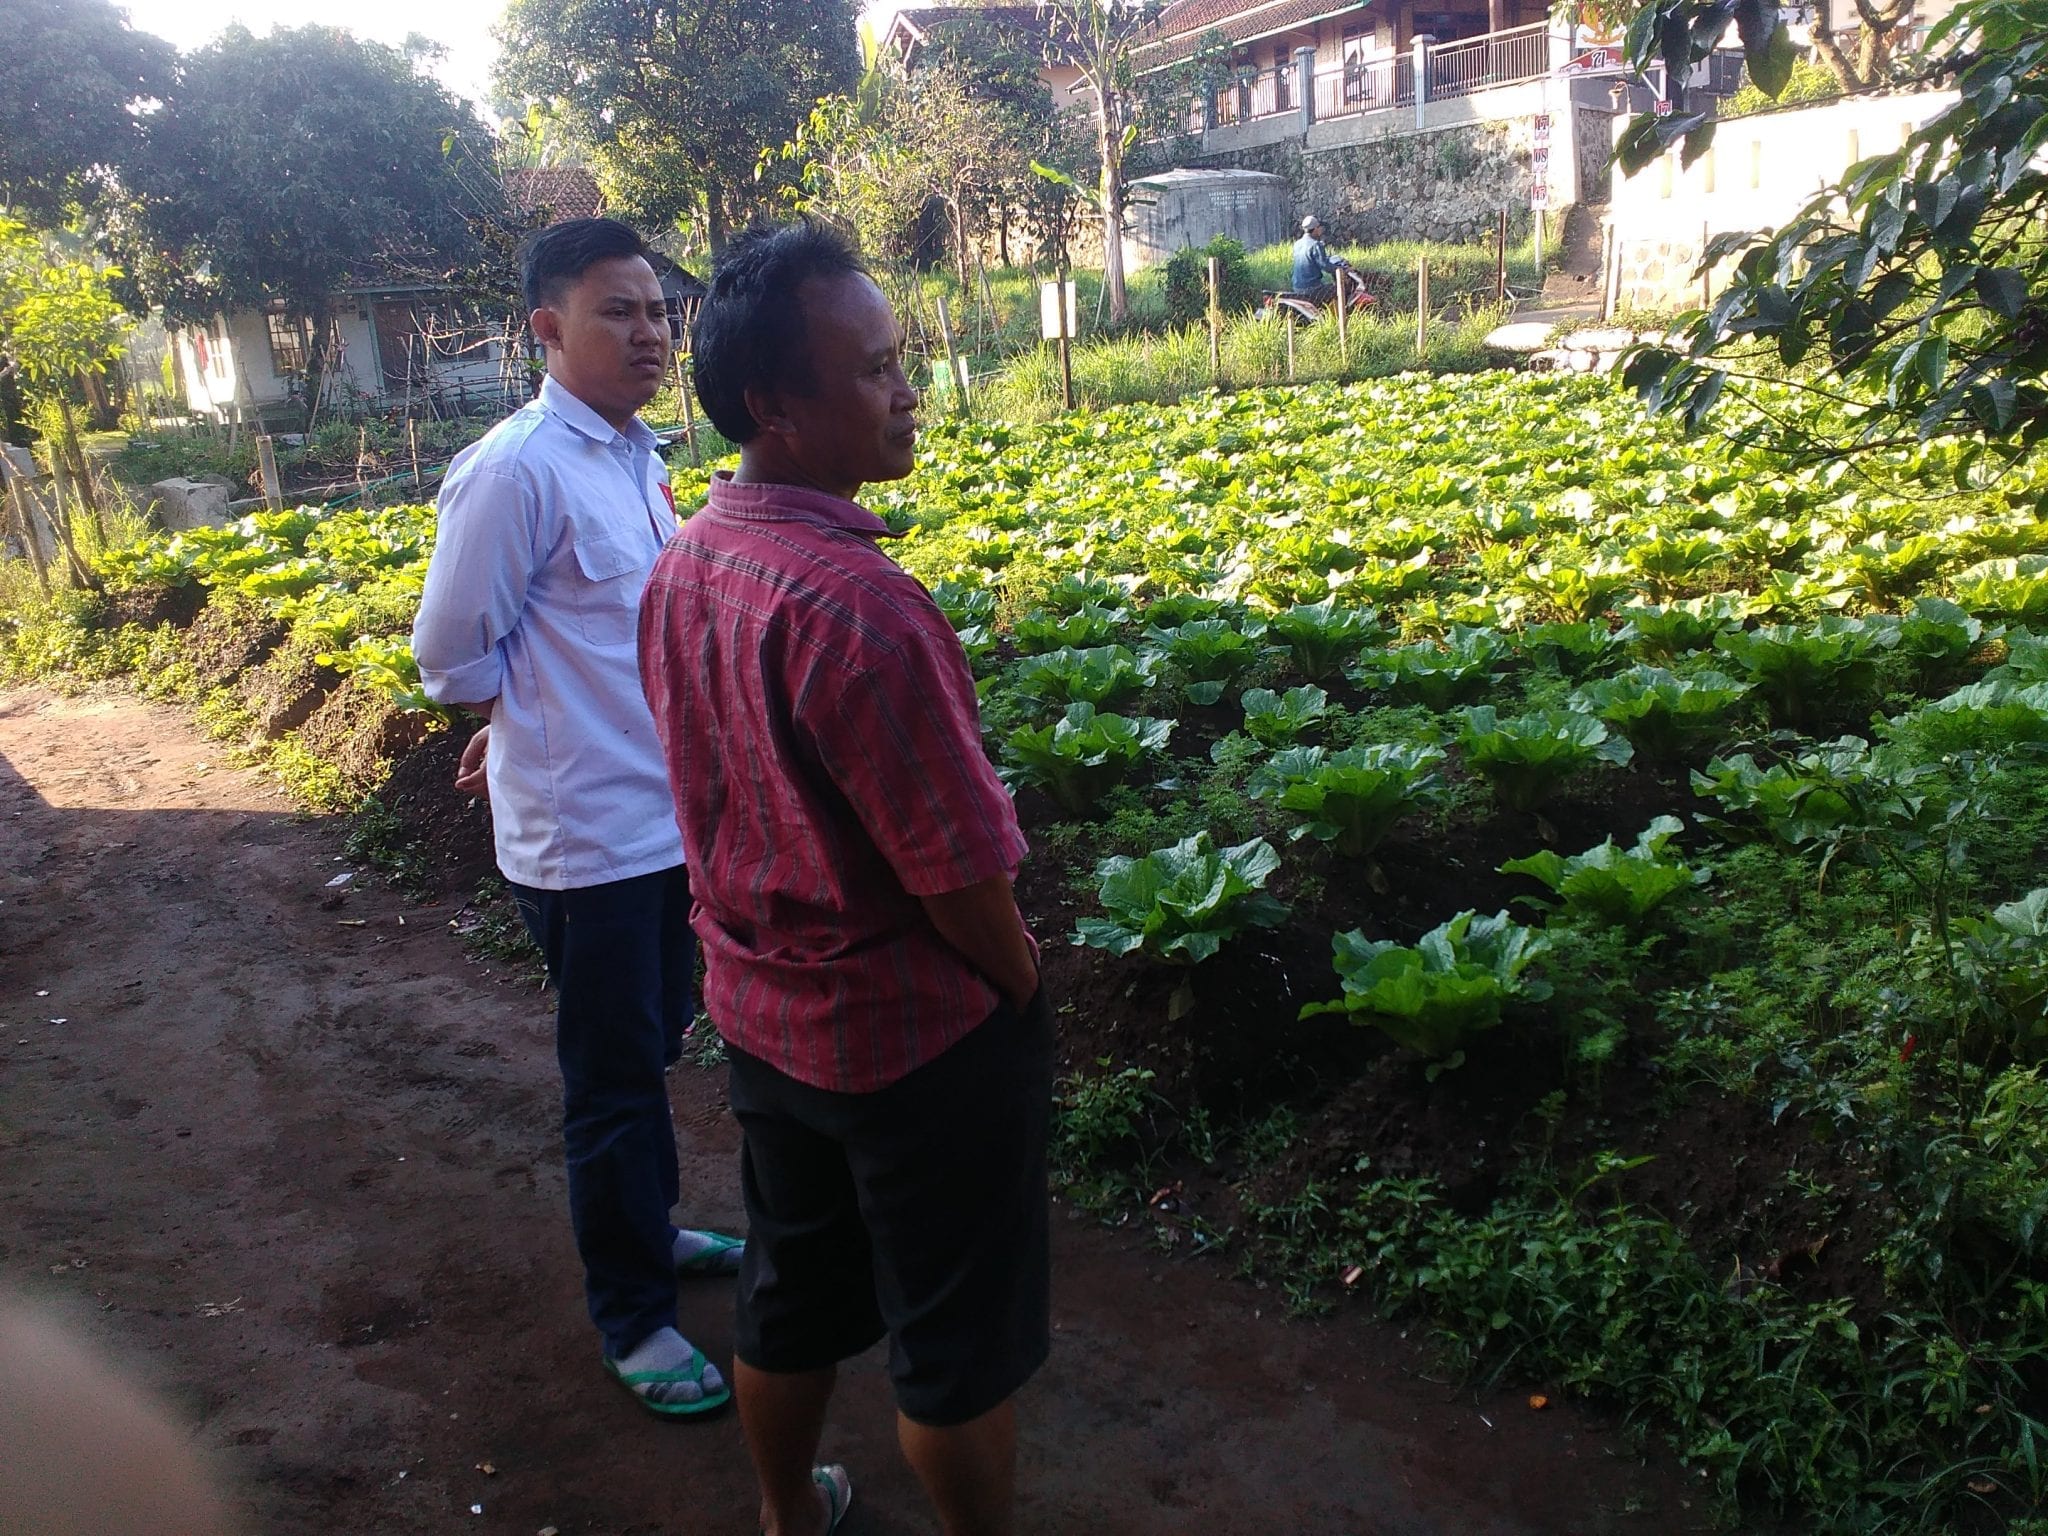 Sekjen Posraya Indonesia: Sejatinya Para Petani di Indonesia Butuh Pendampingan Kaum Intelektual